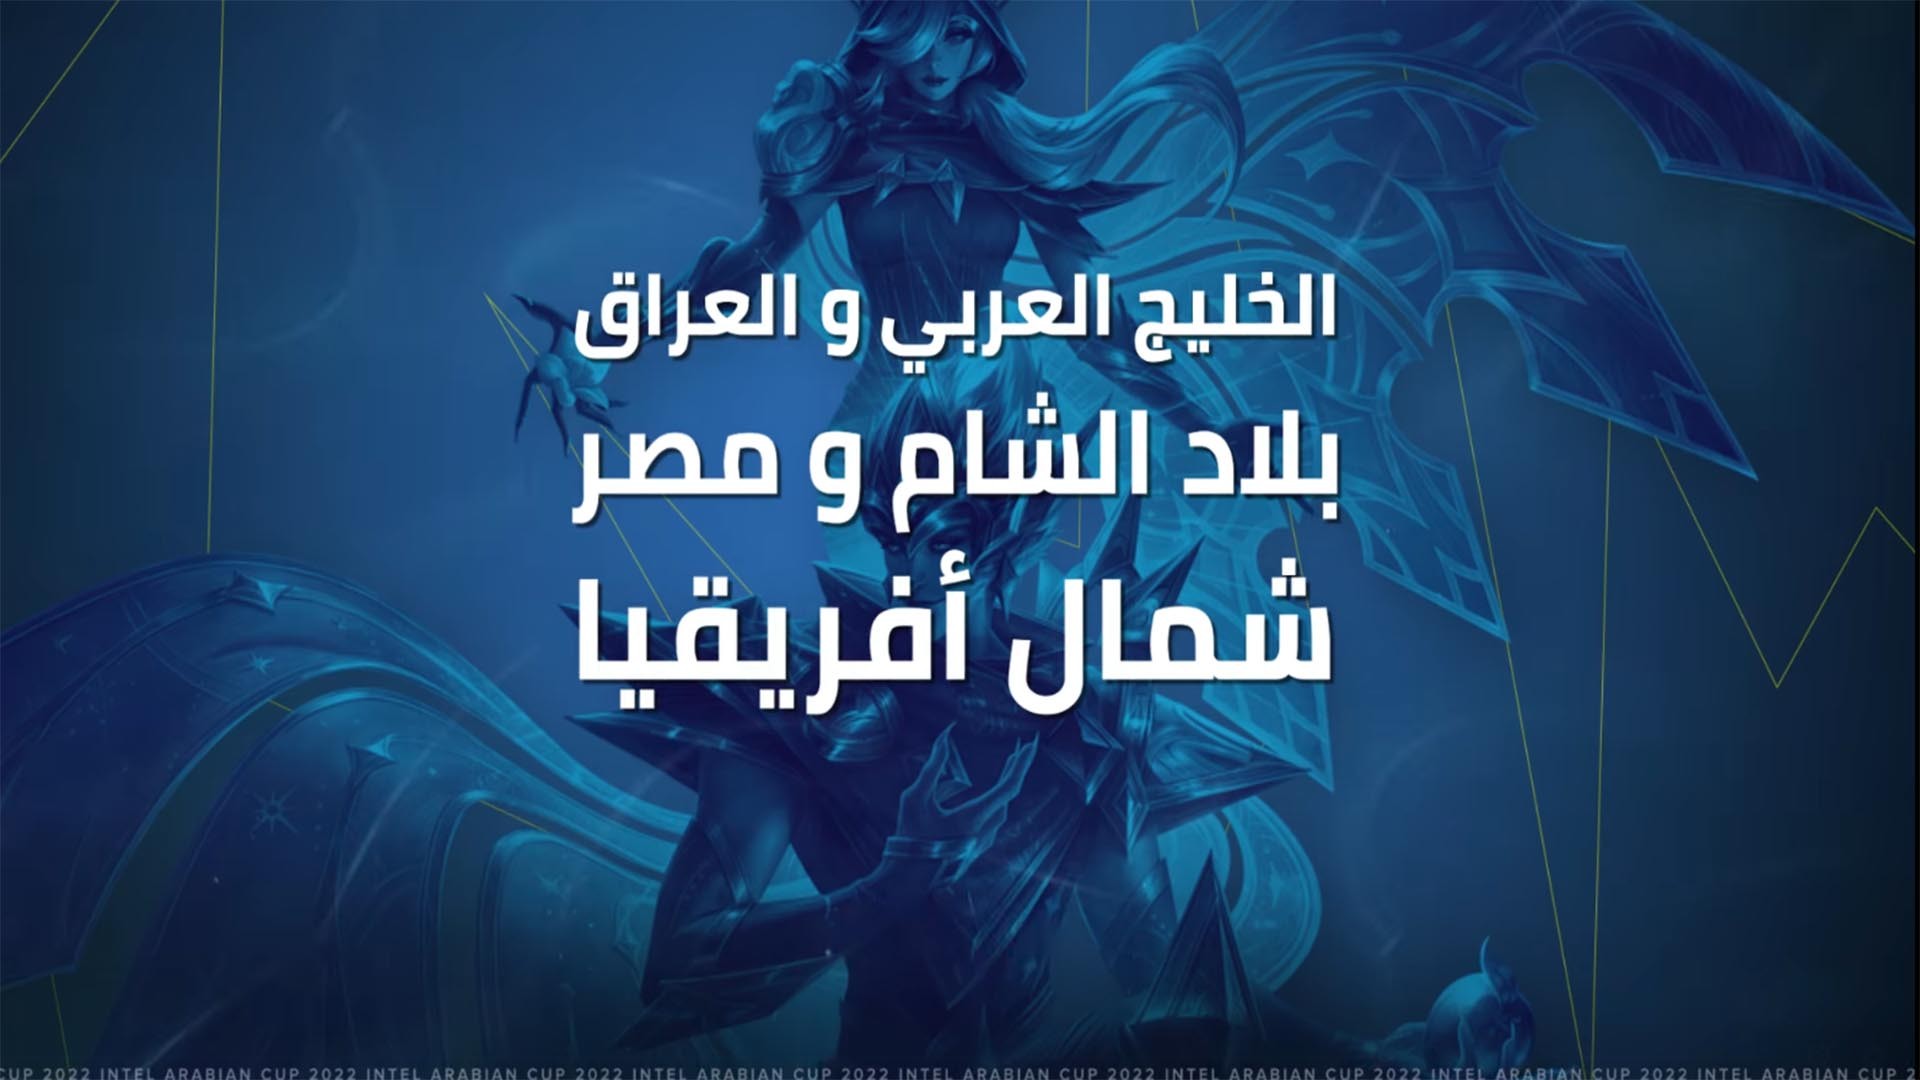 كأس العرب - IAC 2022 - Riot Games - league of legends - intel - intel arc